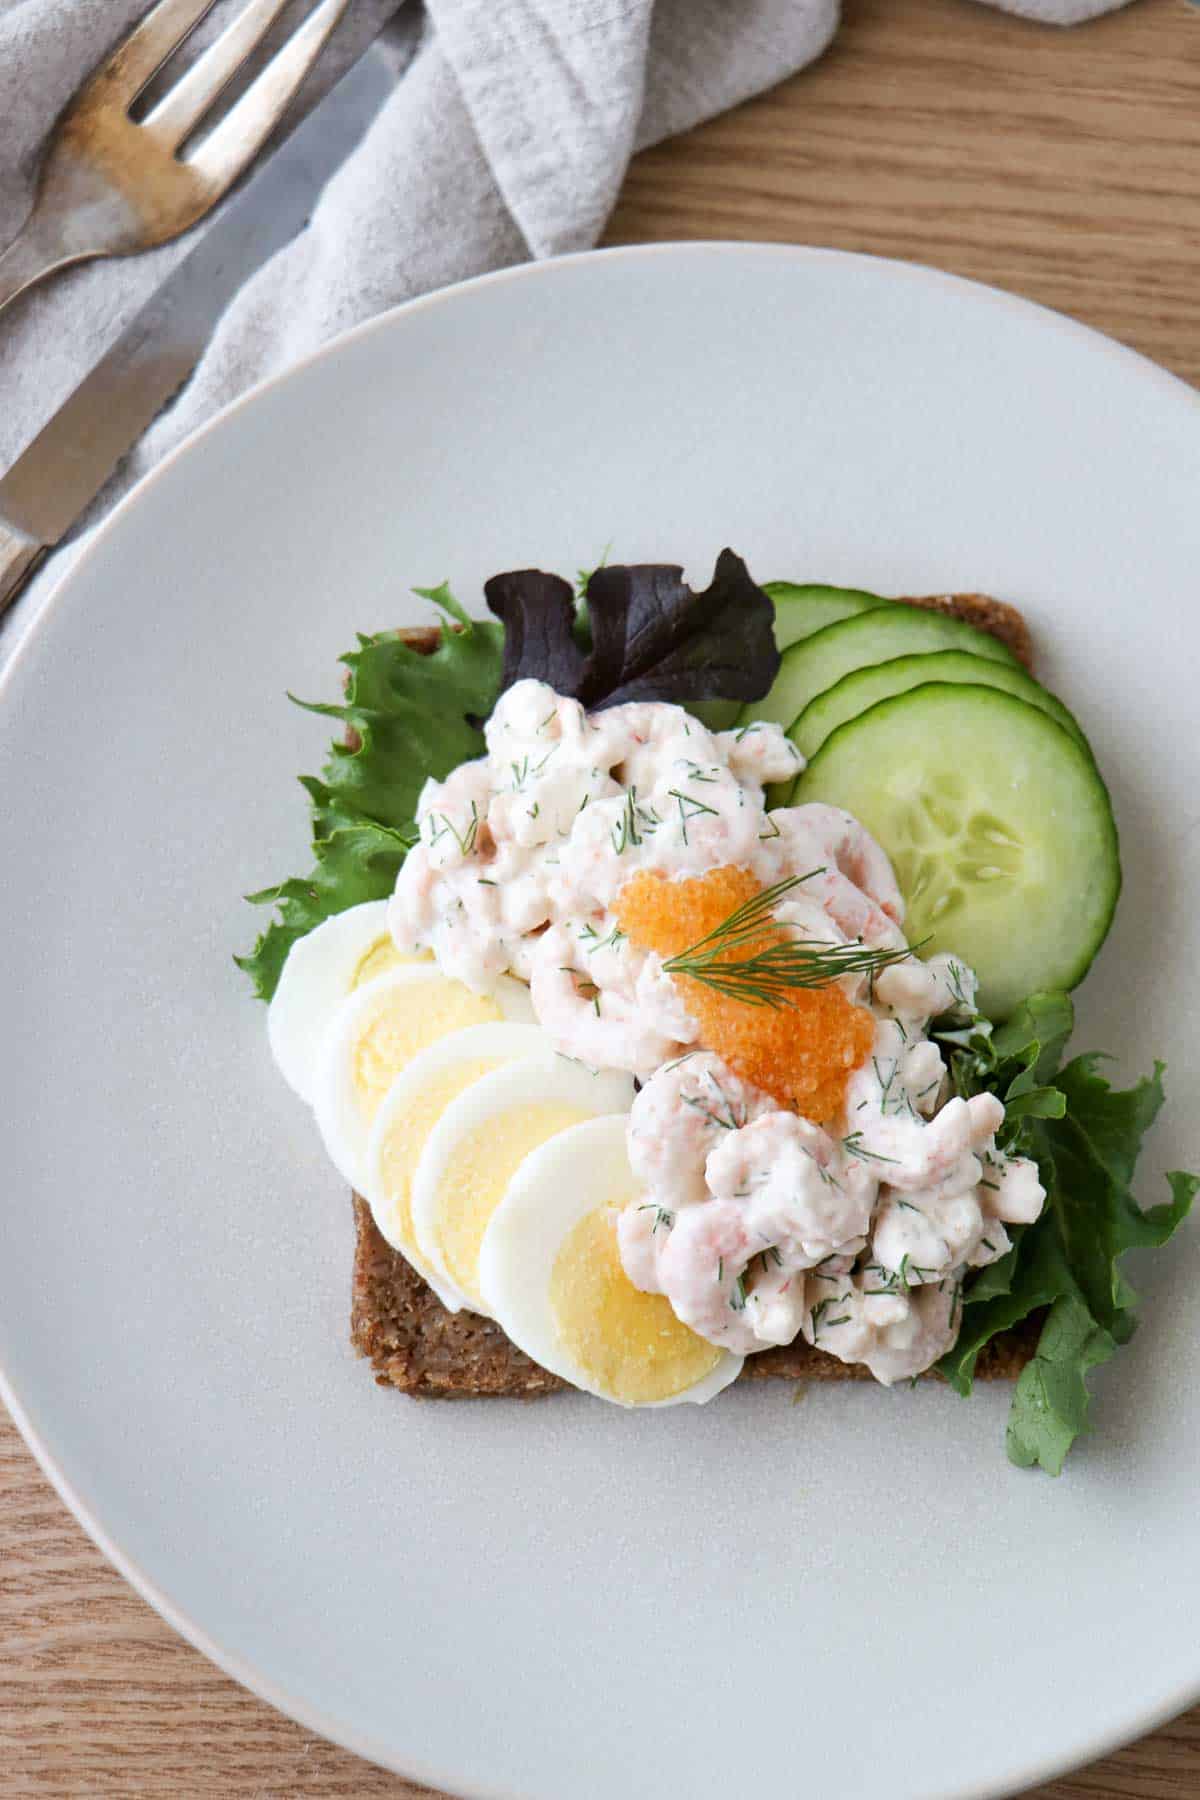 Skagenröra (Swedish Shrimp Salad) on rye bread with sliced hard boiled egg, cucumber and caviar.